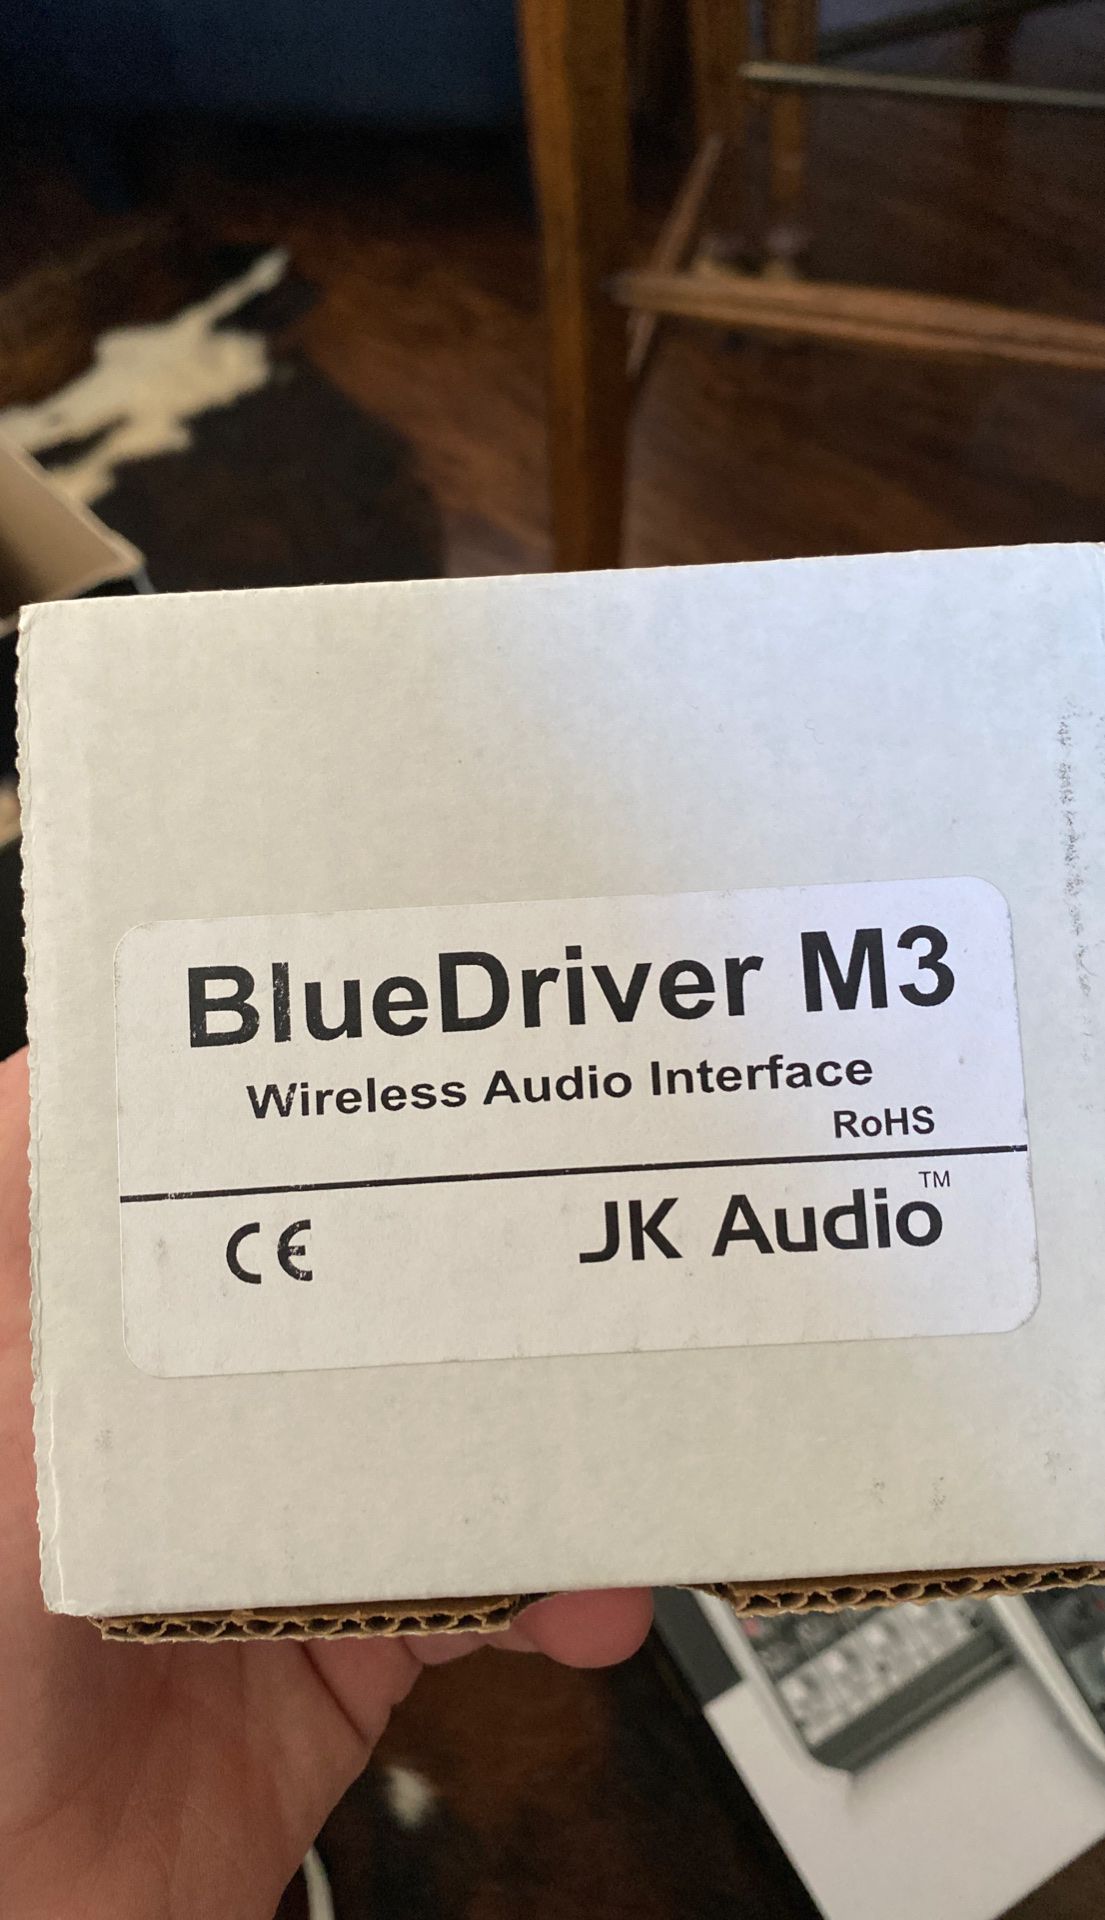 Bluedriver M3 wireless audio interface